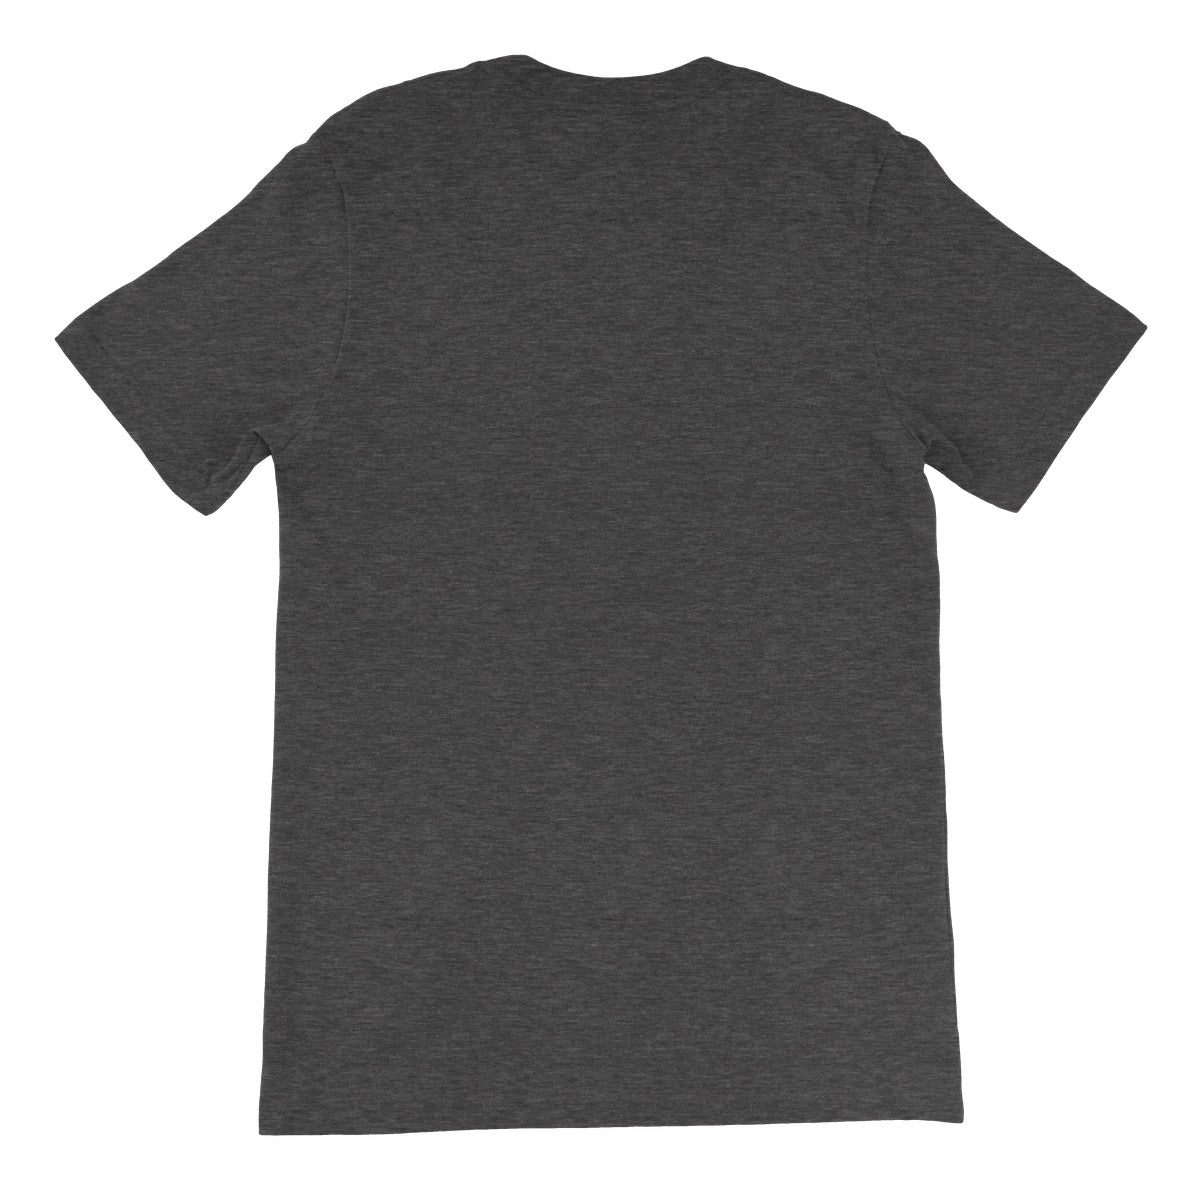 Eikthyrnir Valhalla Stag Unisex Short Sleeve T-Shirt